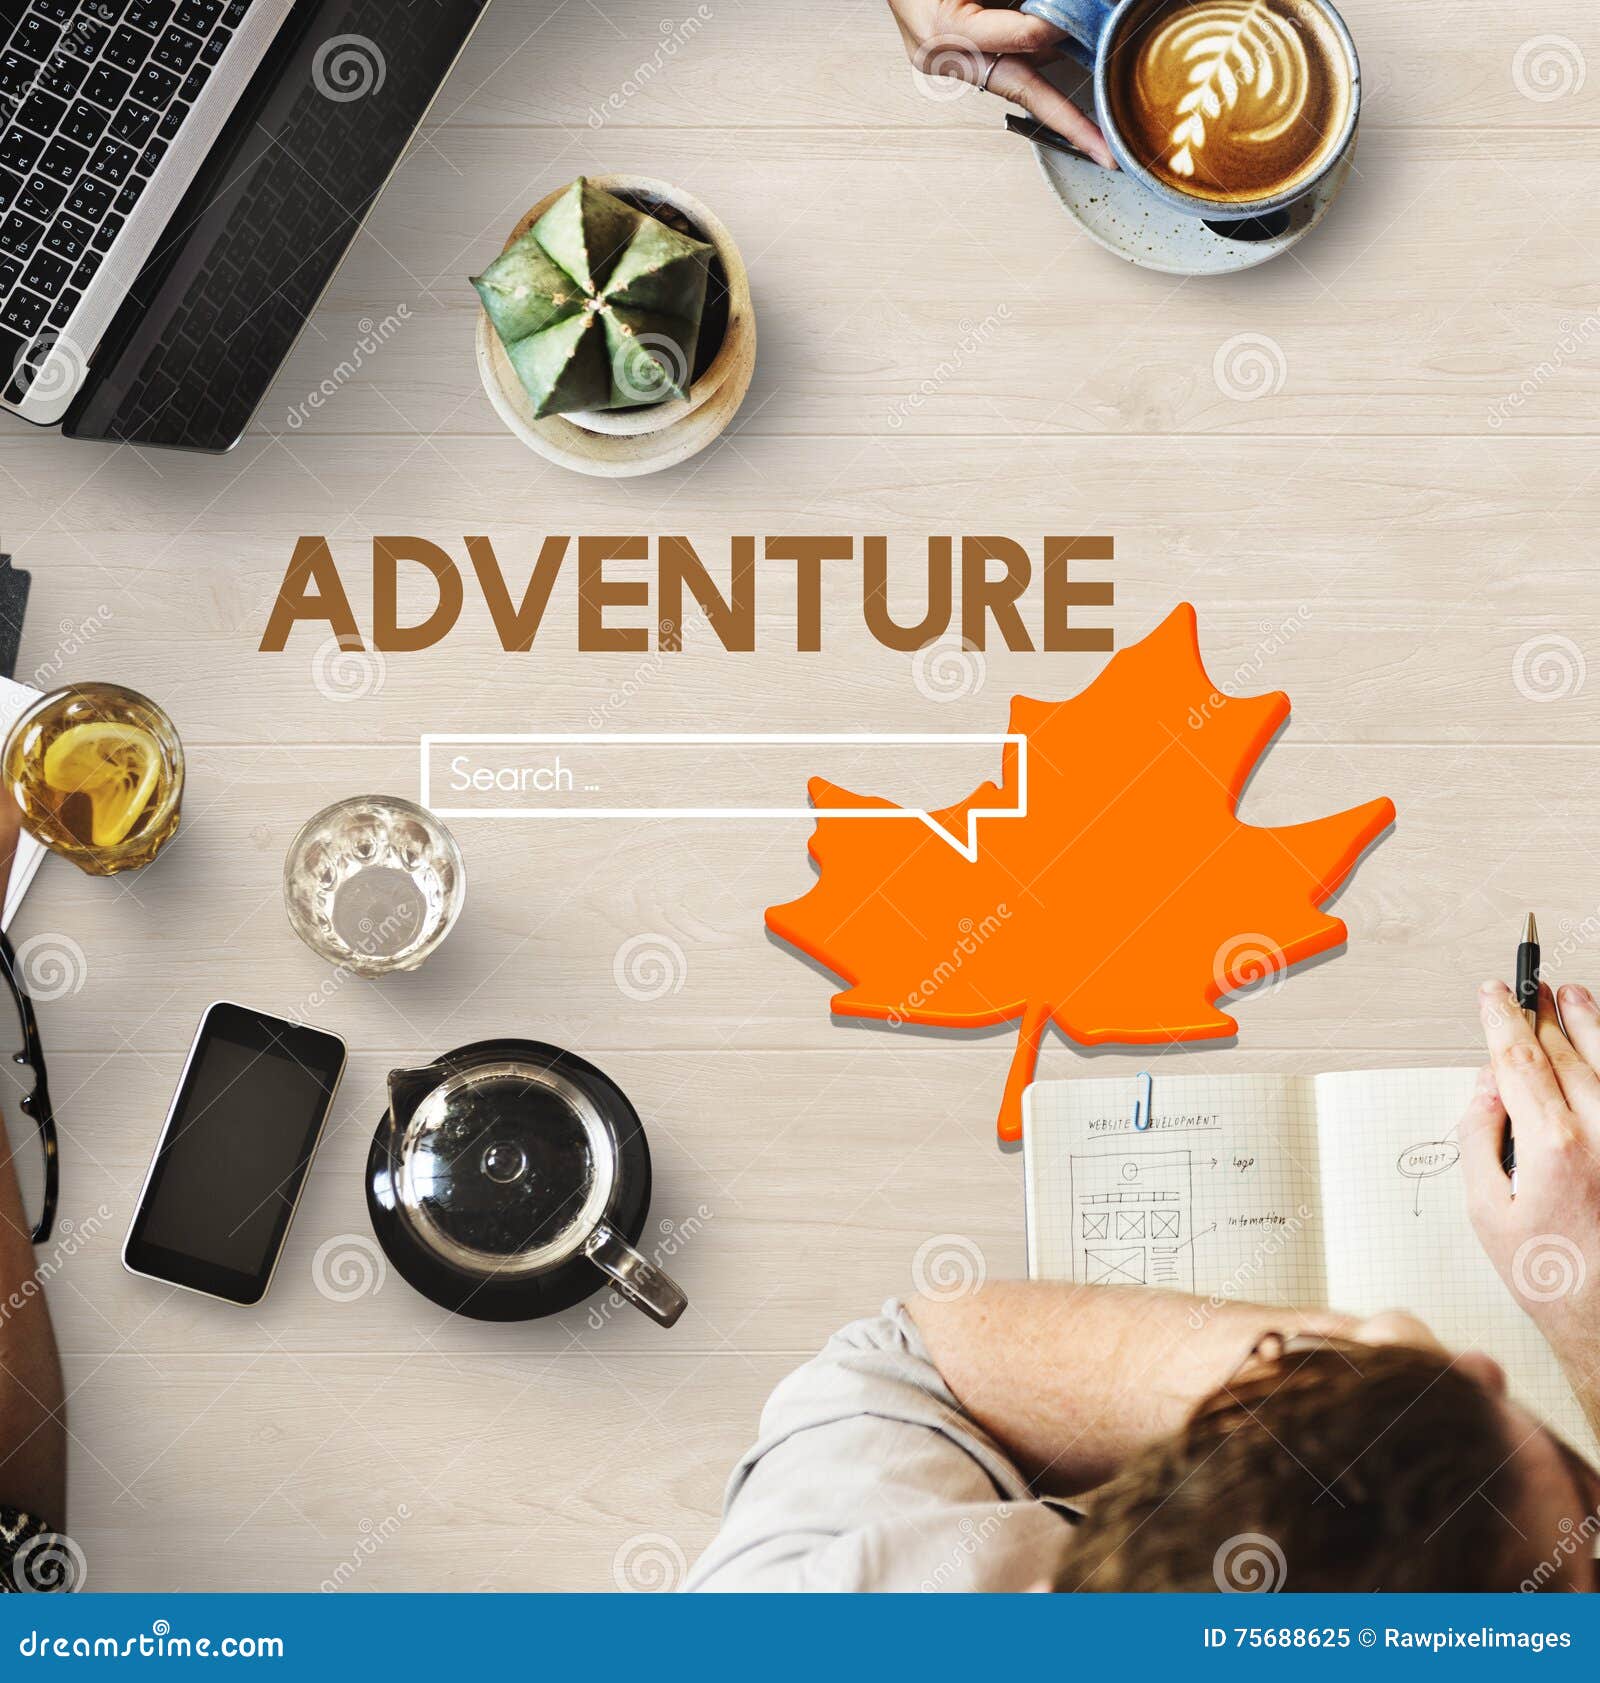 adventure exploration journey lifestyle wanderlust concept